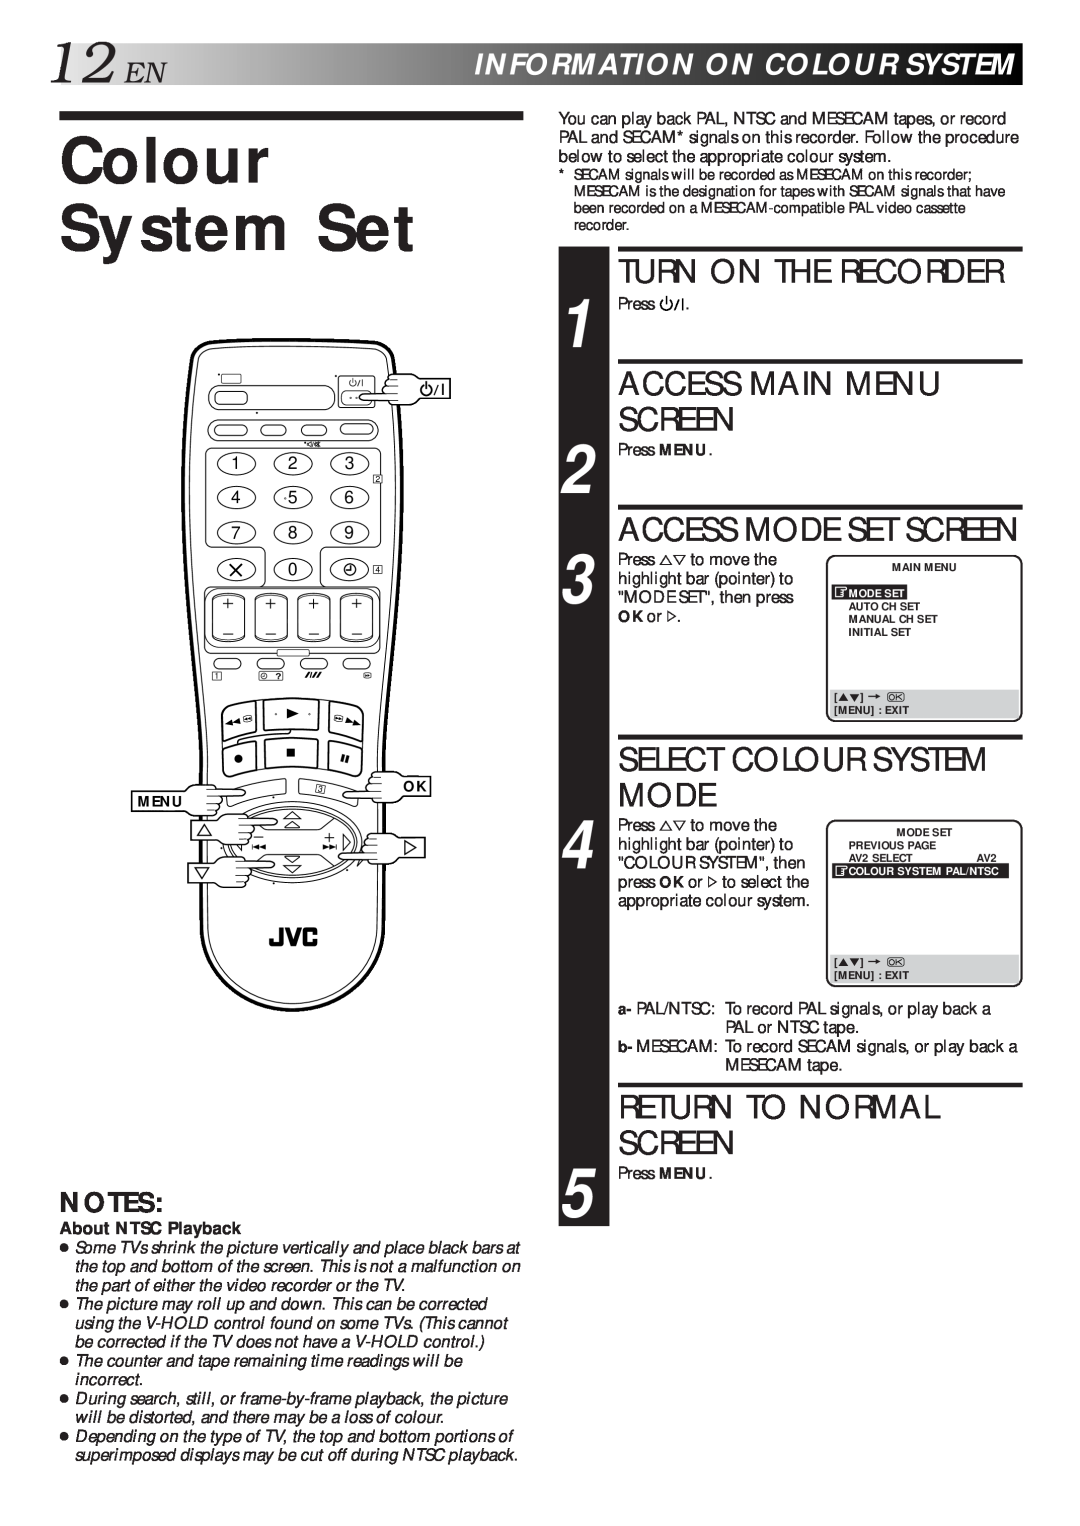 JVC HR-J712EU Colour System Set, 12EN, Mode, Return To Normal Screen, Informationoncoloursystem, Select Colour System 